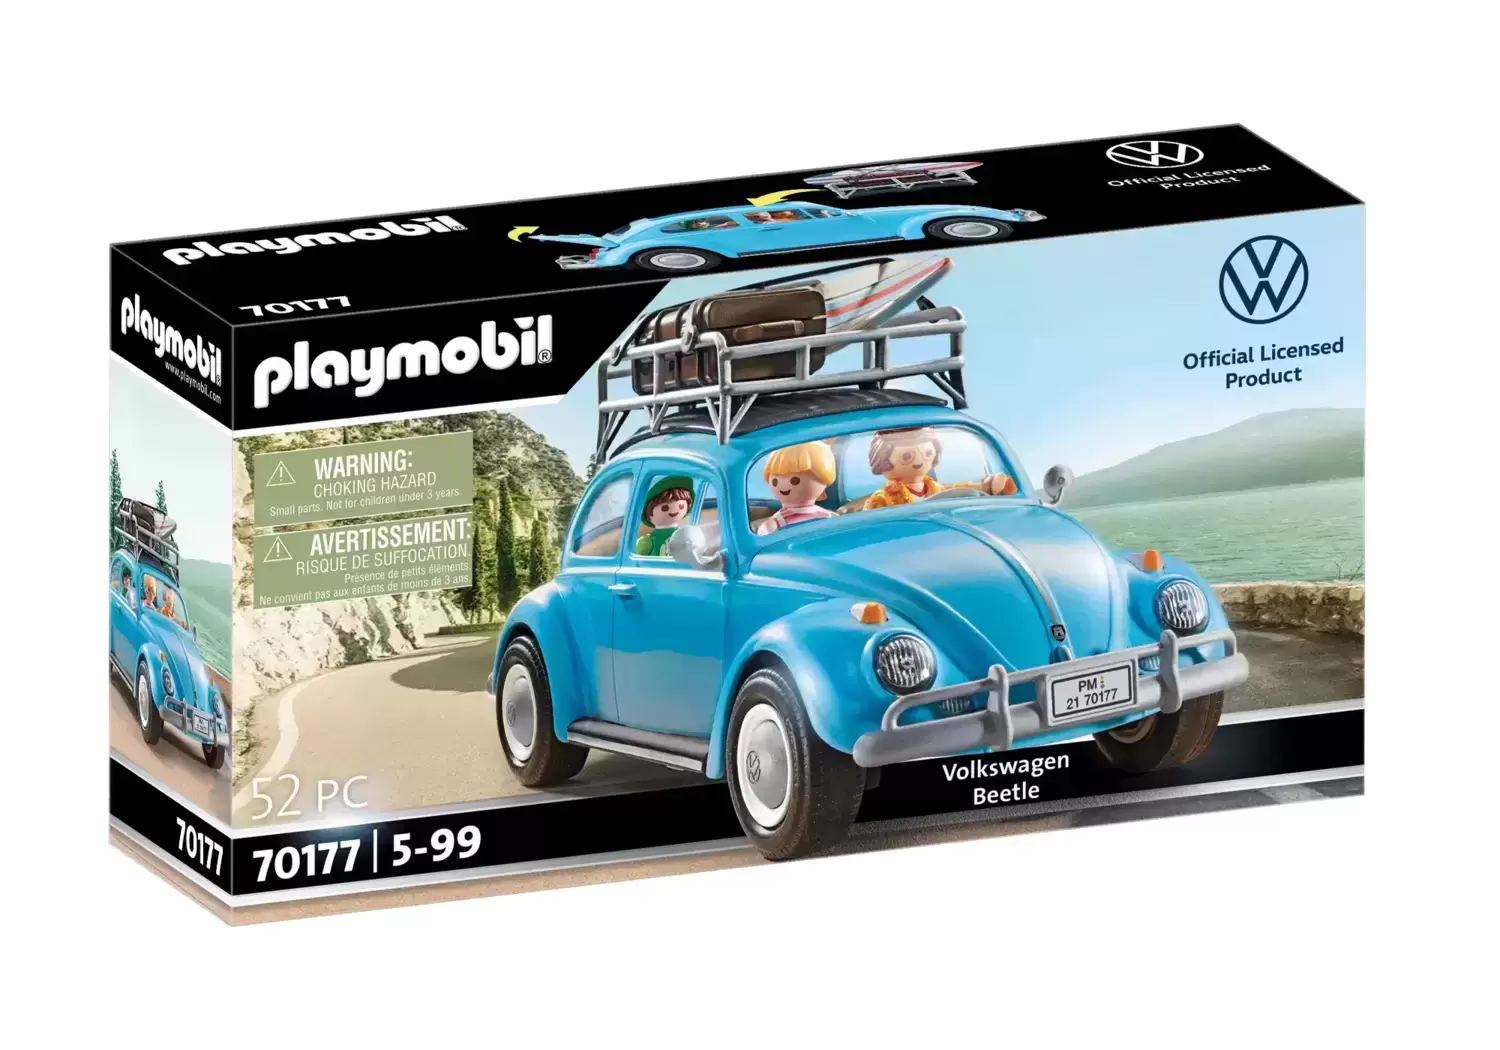 Playmobil Classic Cars - Volkswagen Beetle